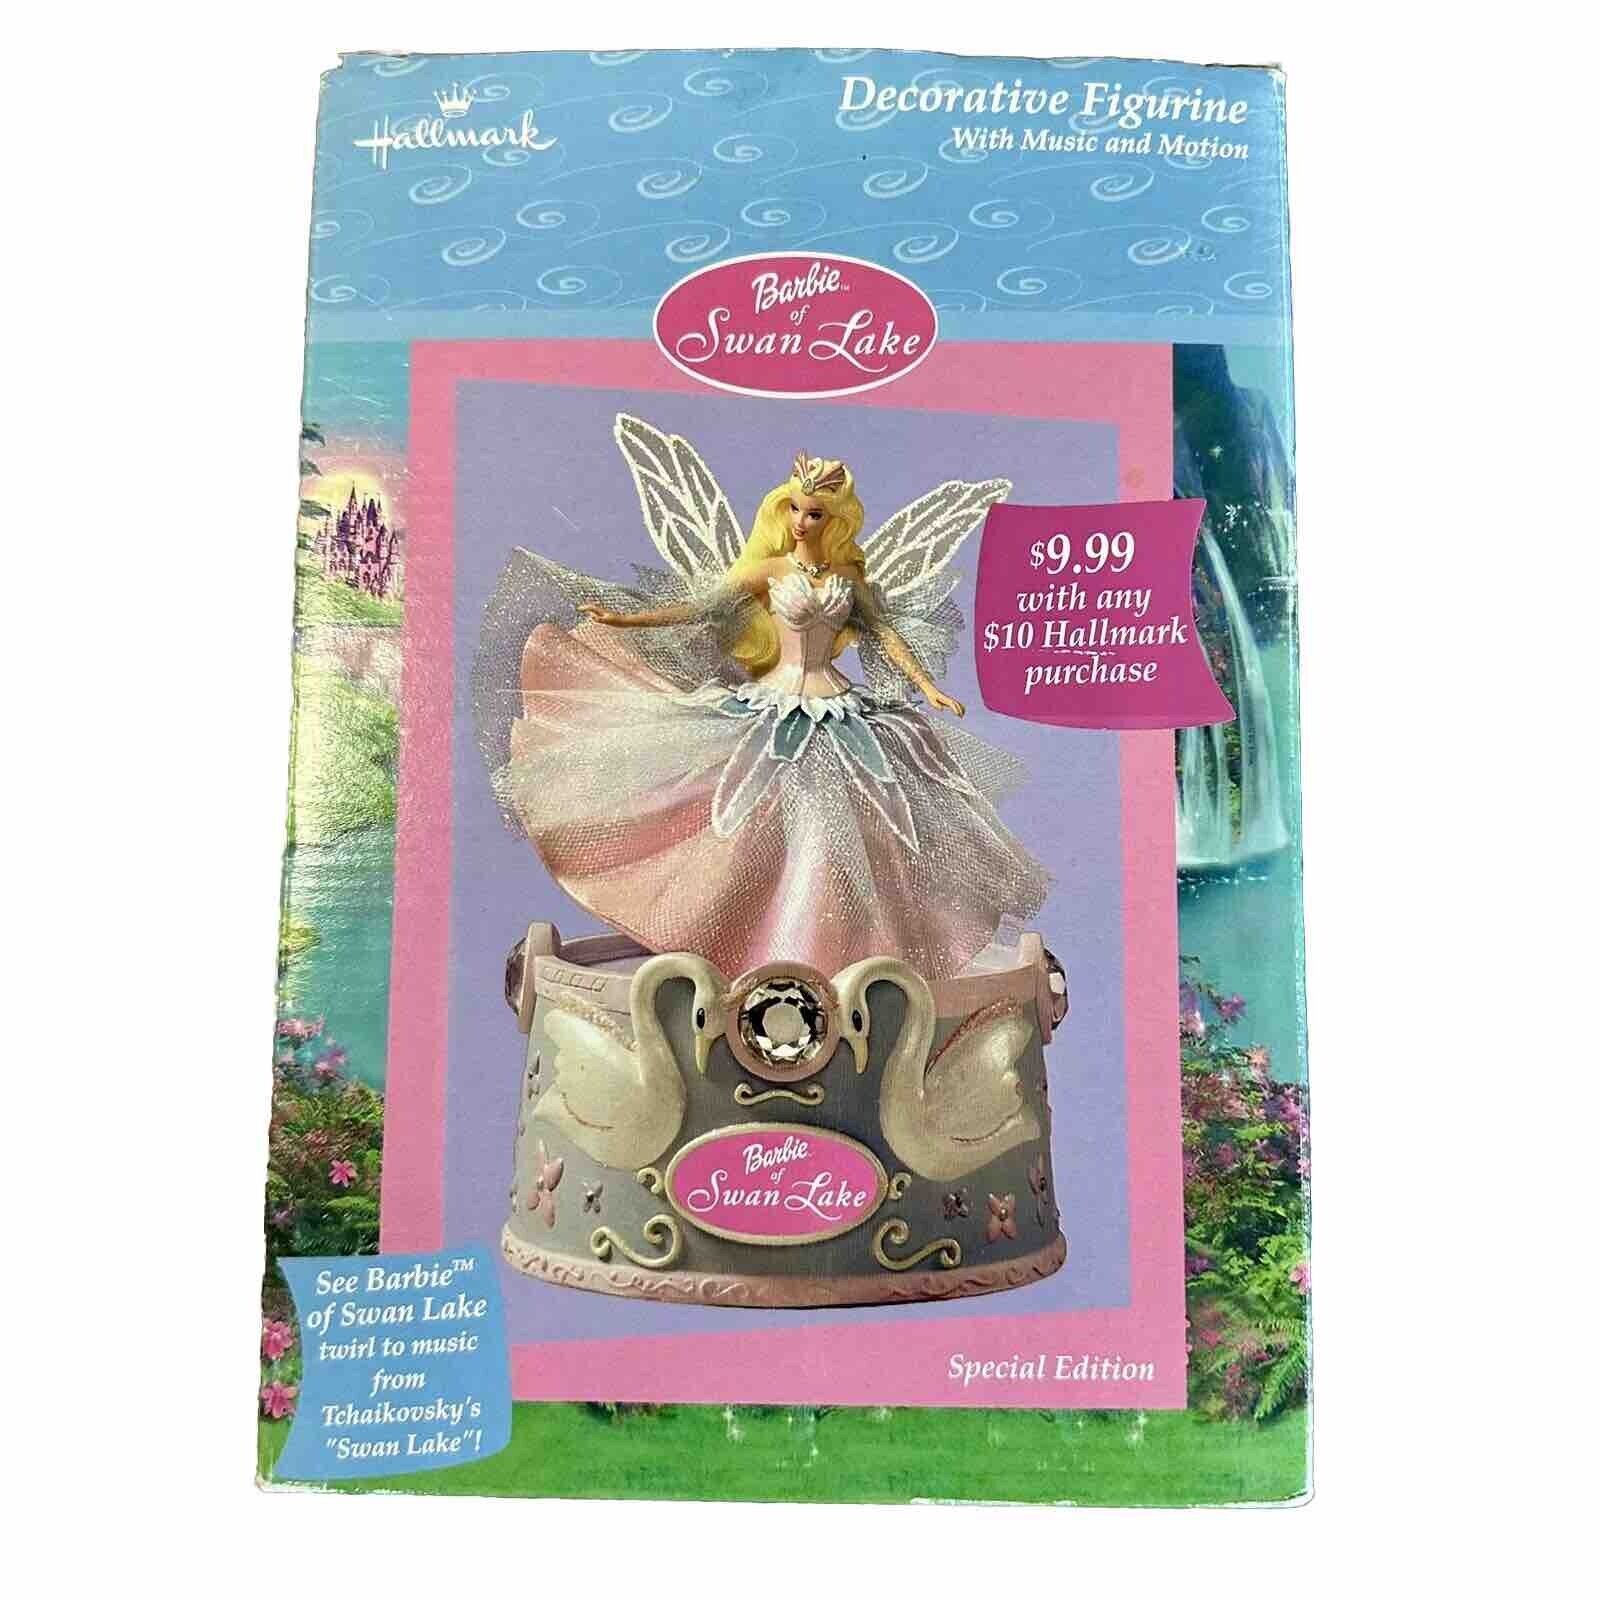 2003 Mattel Hallmark Barbie Tchaikovsky Swan Lake Figurine Wind up Music Box